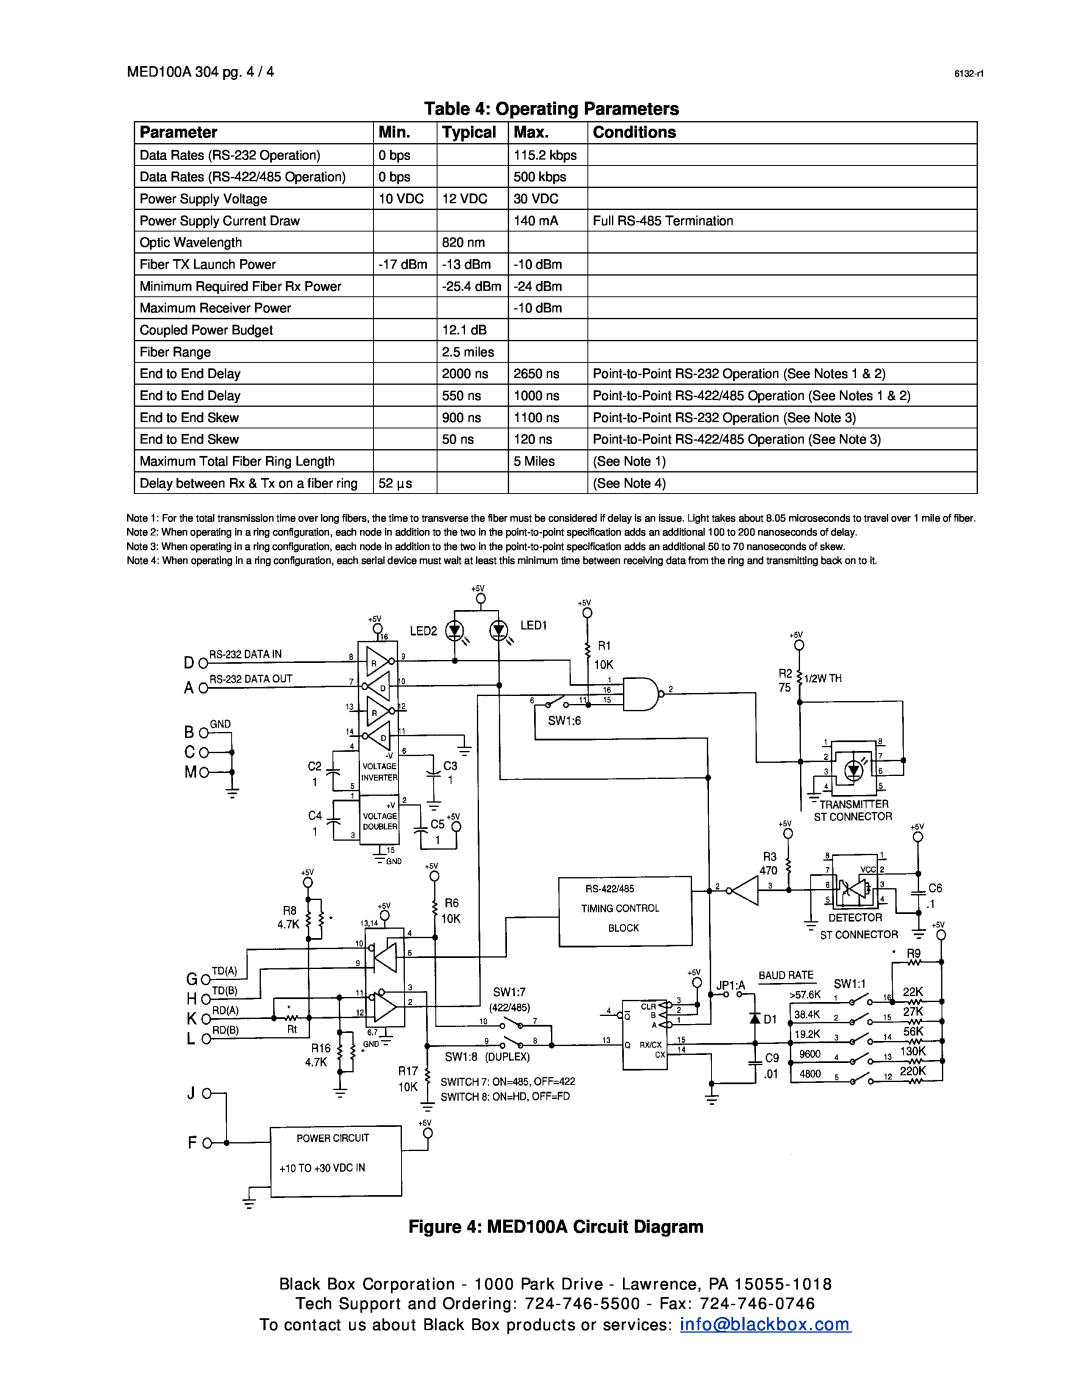 Black Box Fiber Optic Modem manual Operating Parameters, MED100A Circuit Diagram, Typical, Conditions 